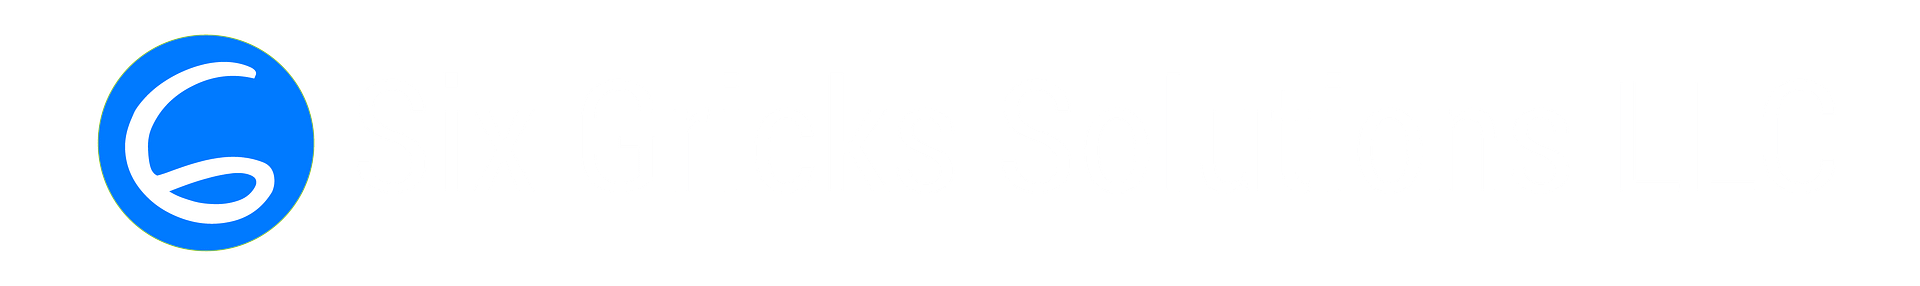 Six Gricks Solutions LLC